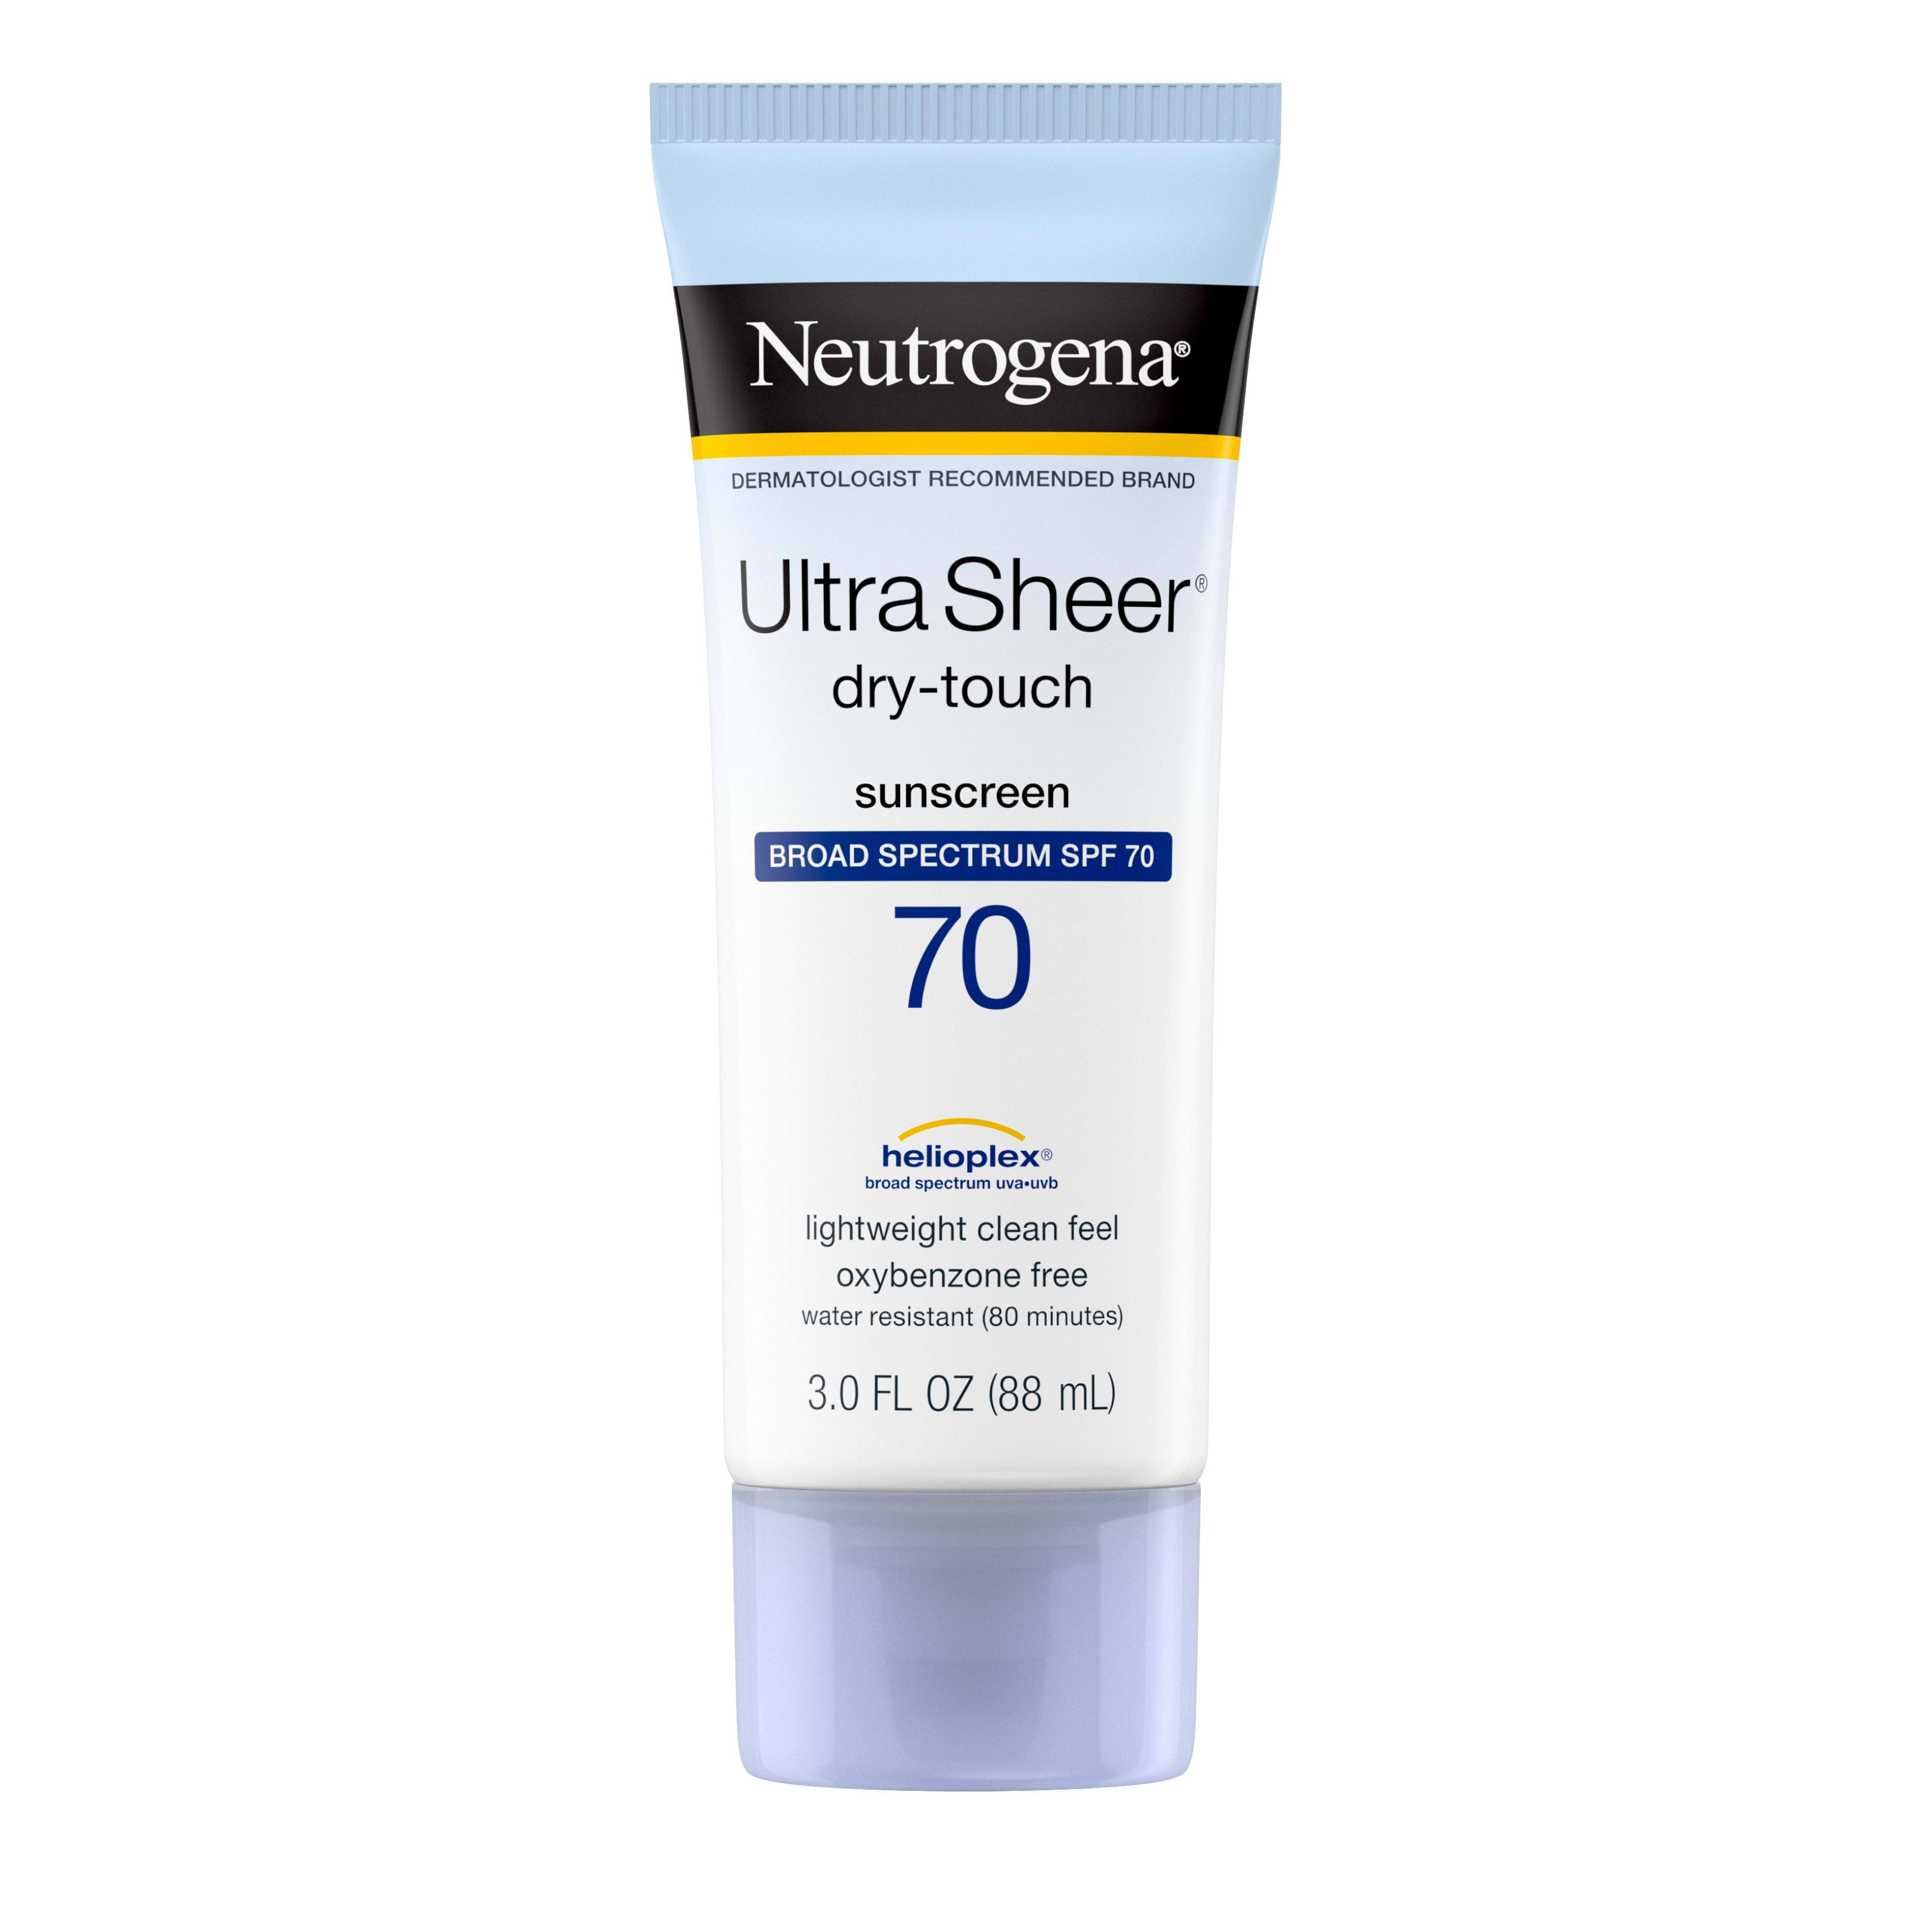 Neutrogena Ultra Sheer Dry-touch Sunblock - SPF 70, 88ml